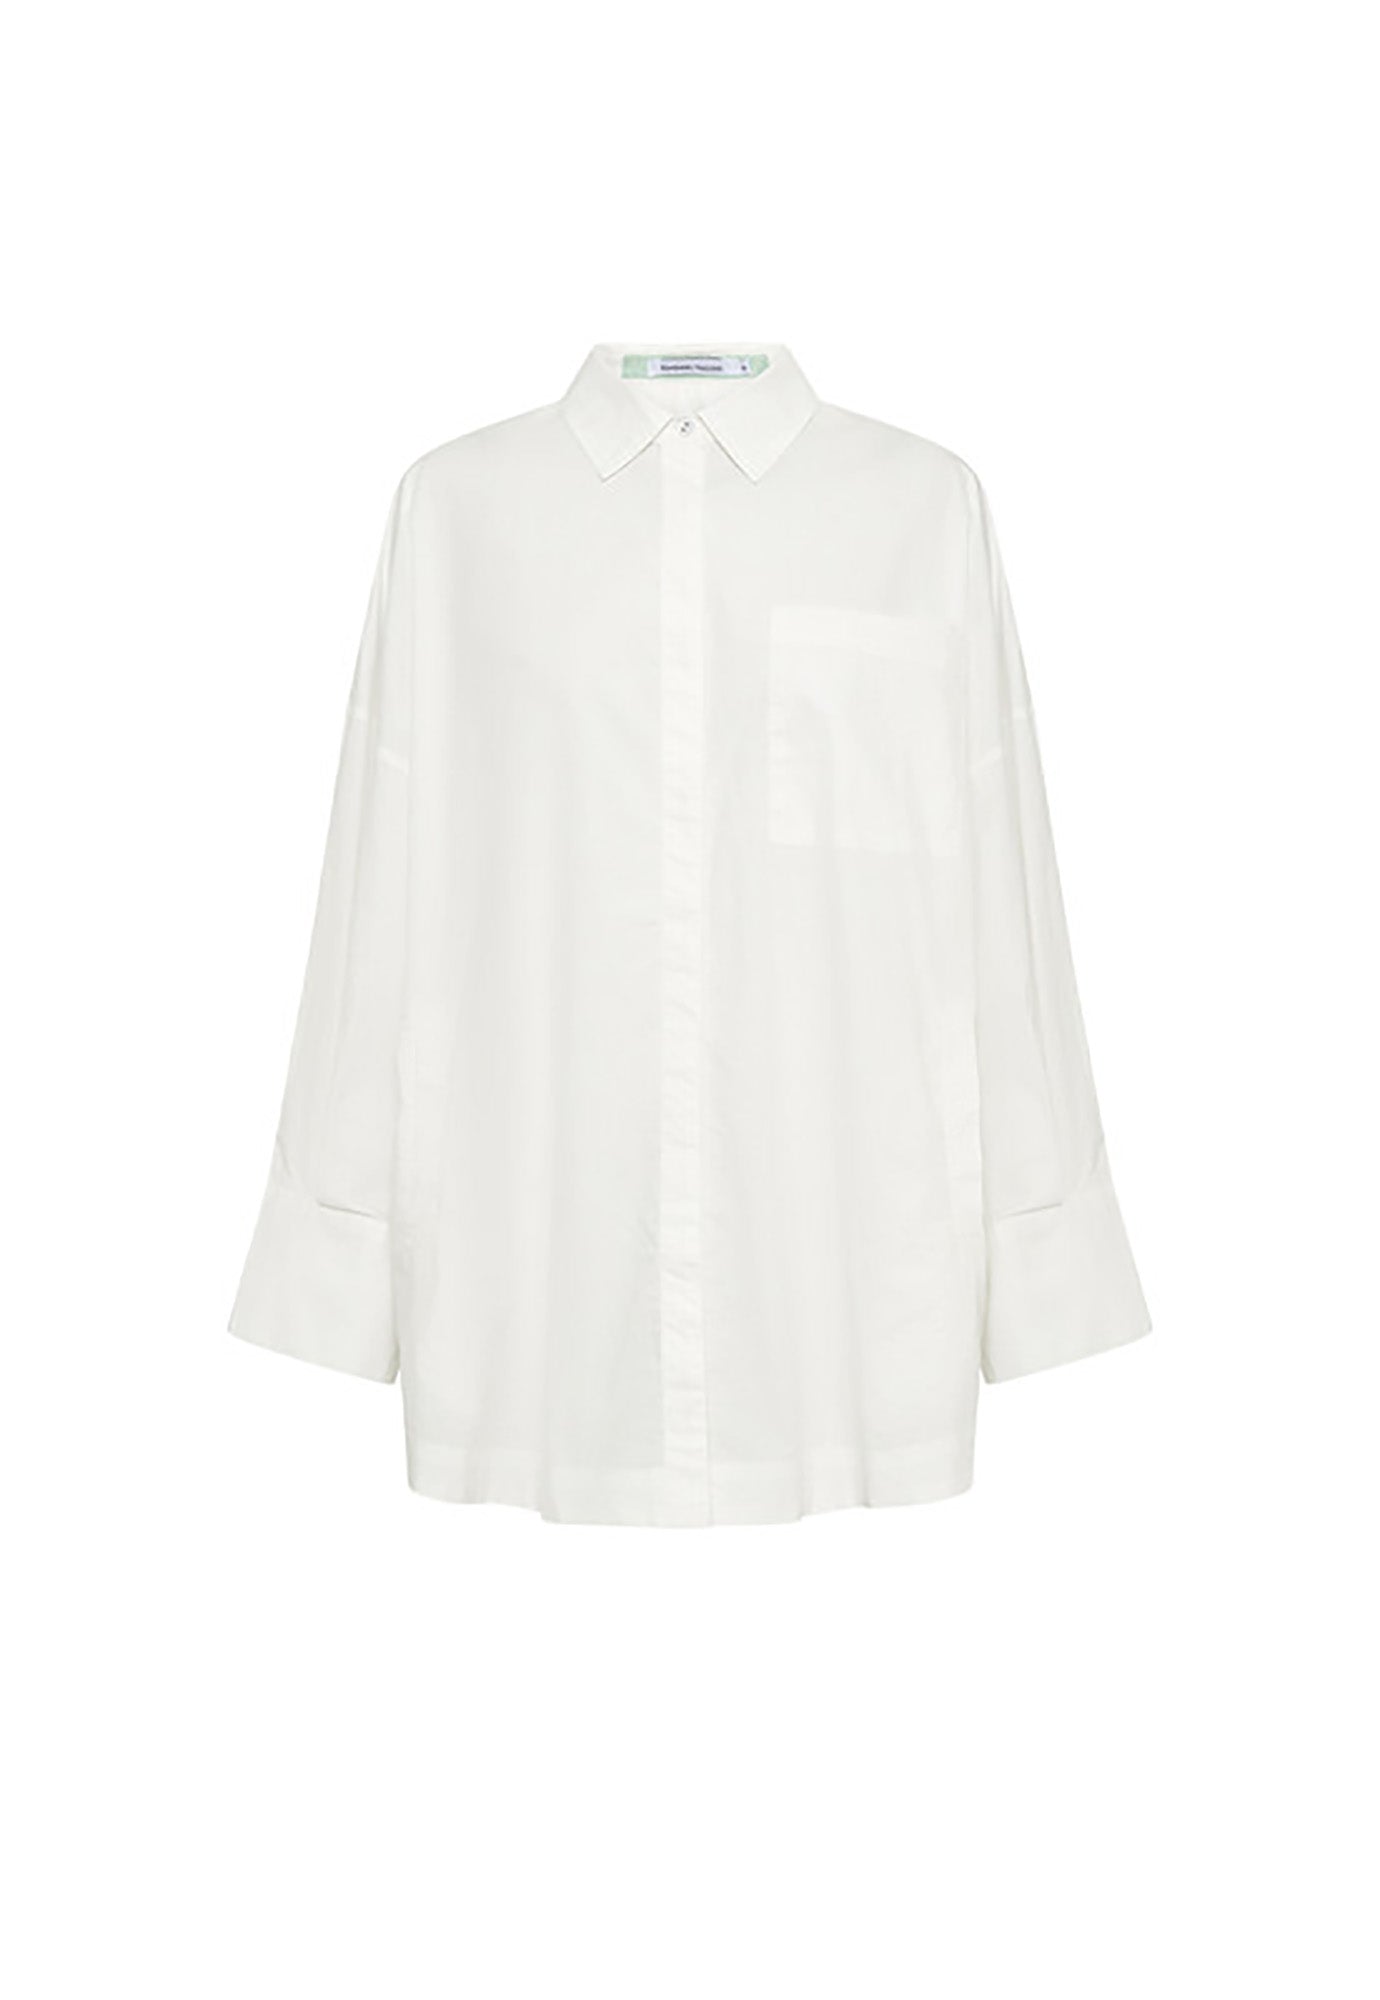 bohemian traders - oversized l/s shirt - white